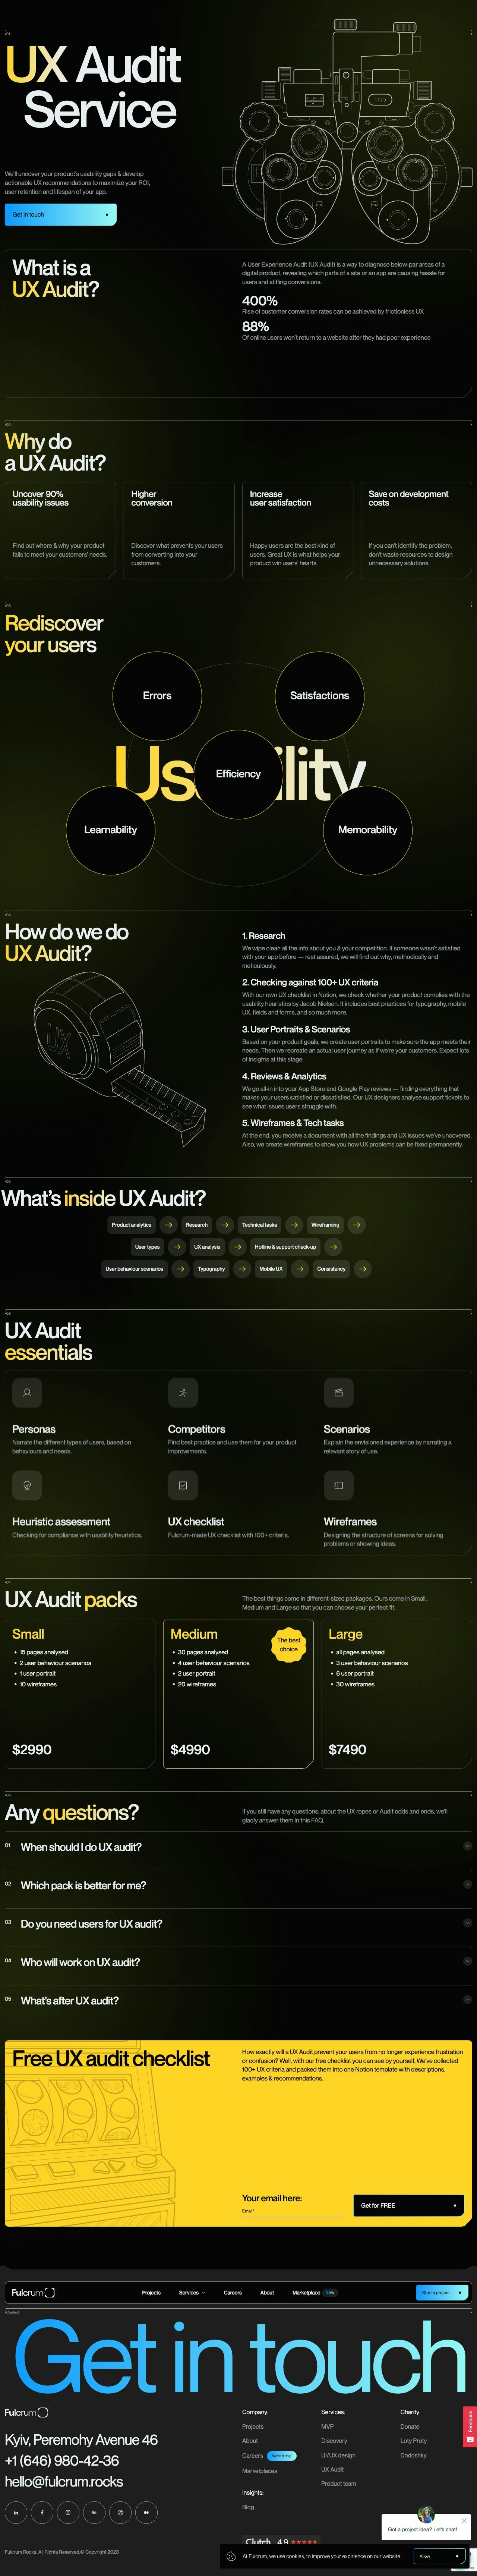 UX Audit landing page design